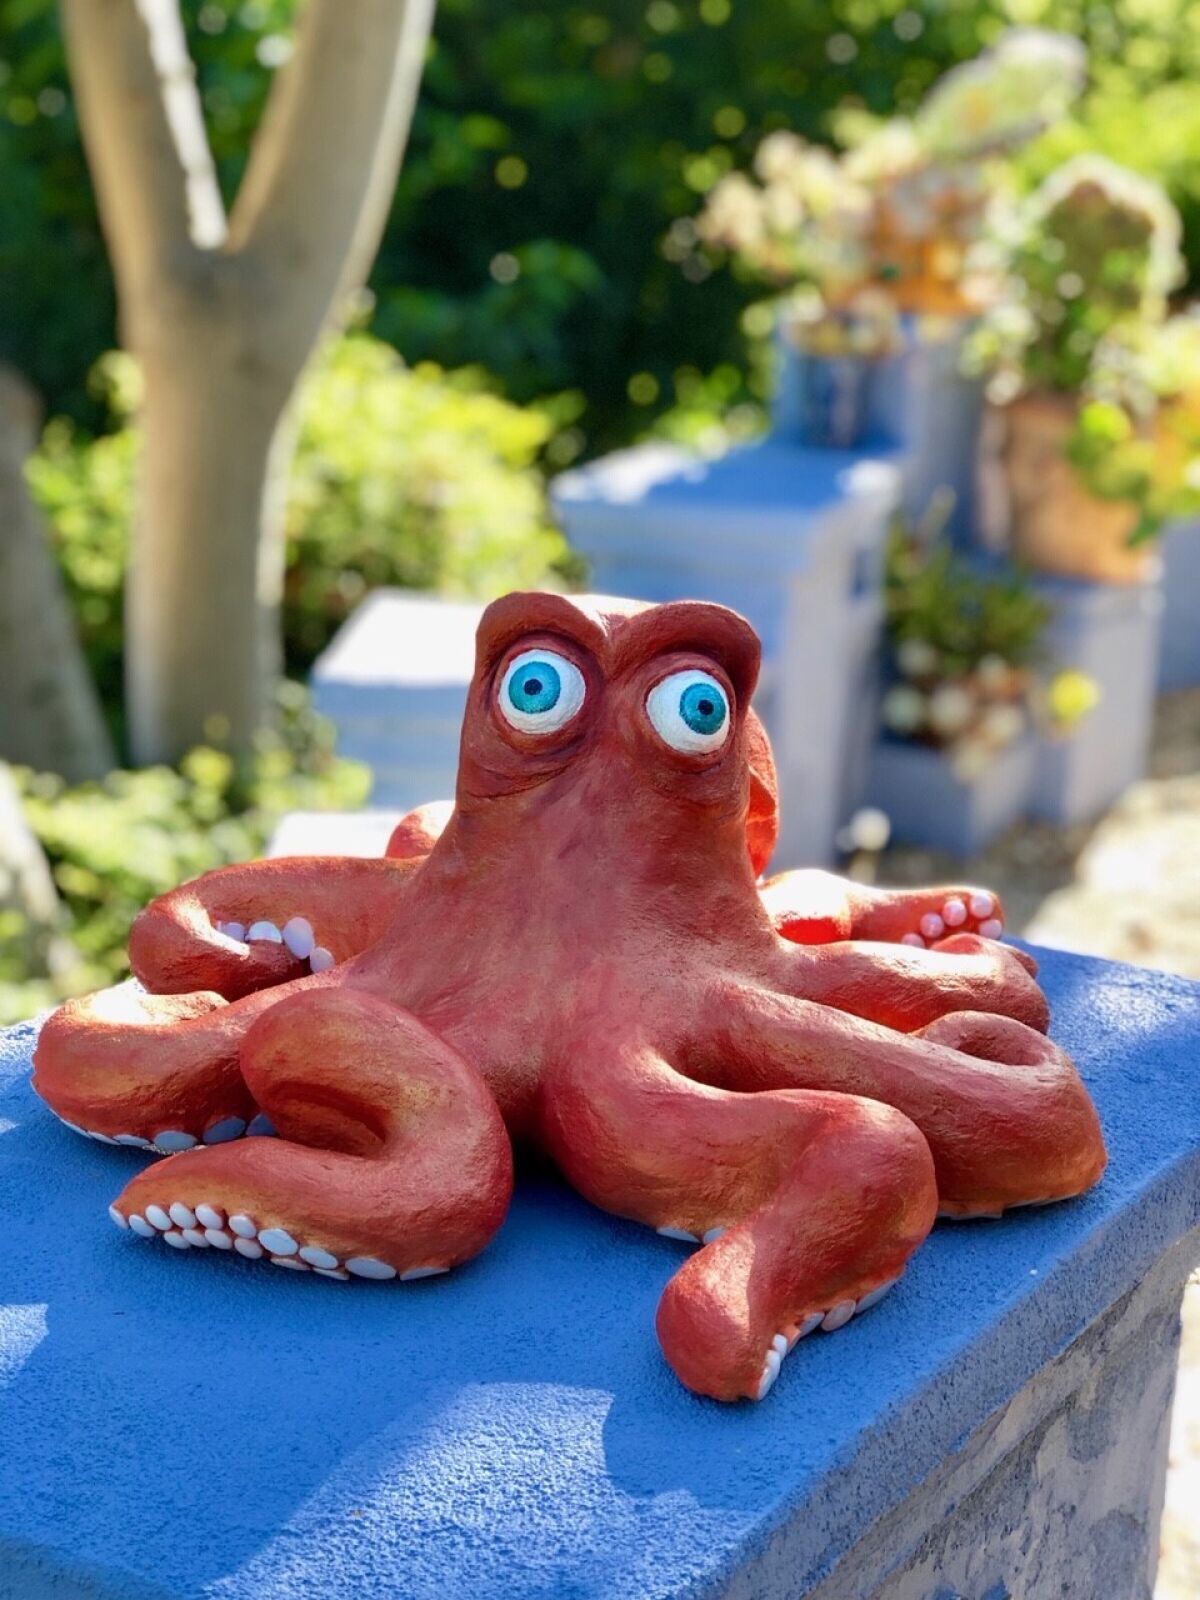 Helen Segal's octopus sculpture. This particular guy is headed for San Diego Jewish Academy's preschool.